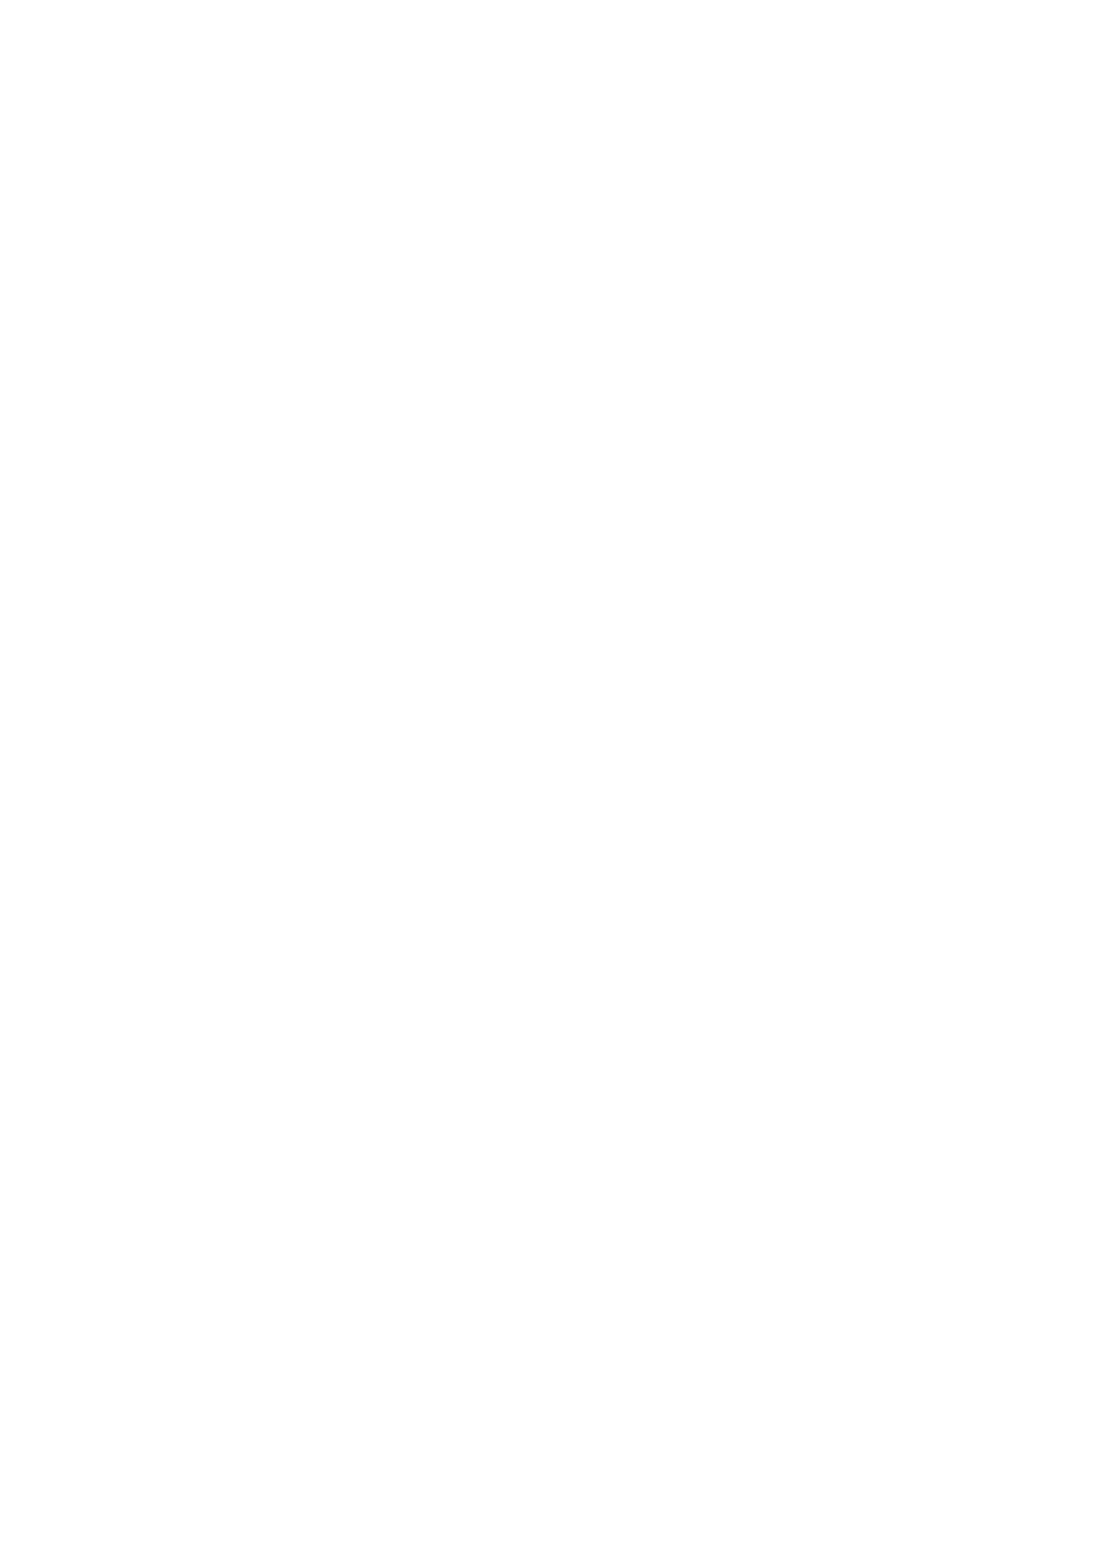 Maaden logo pour fonds sombres (PNG transparent)